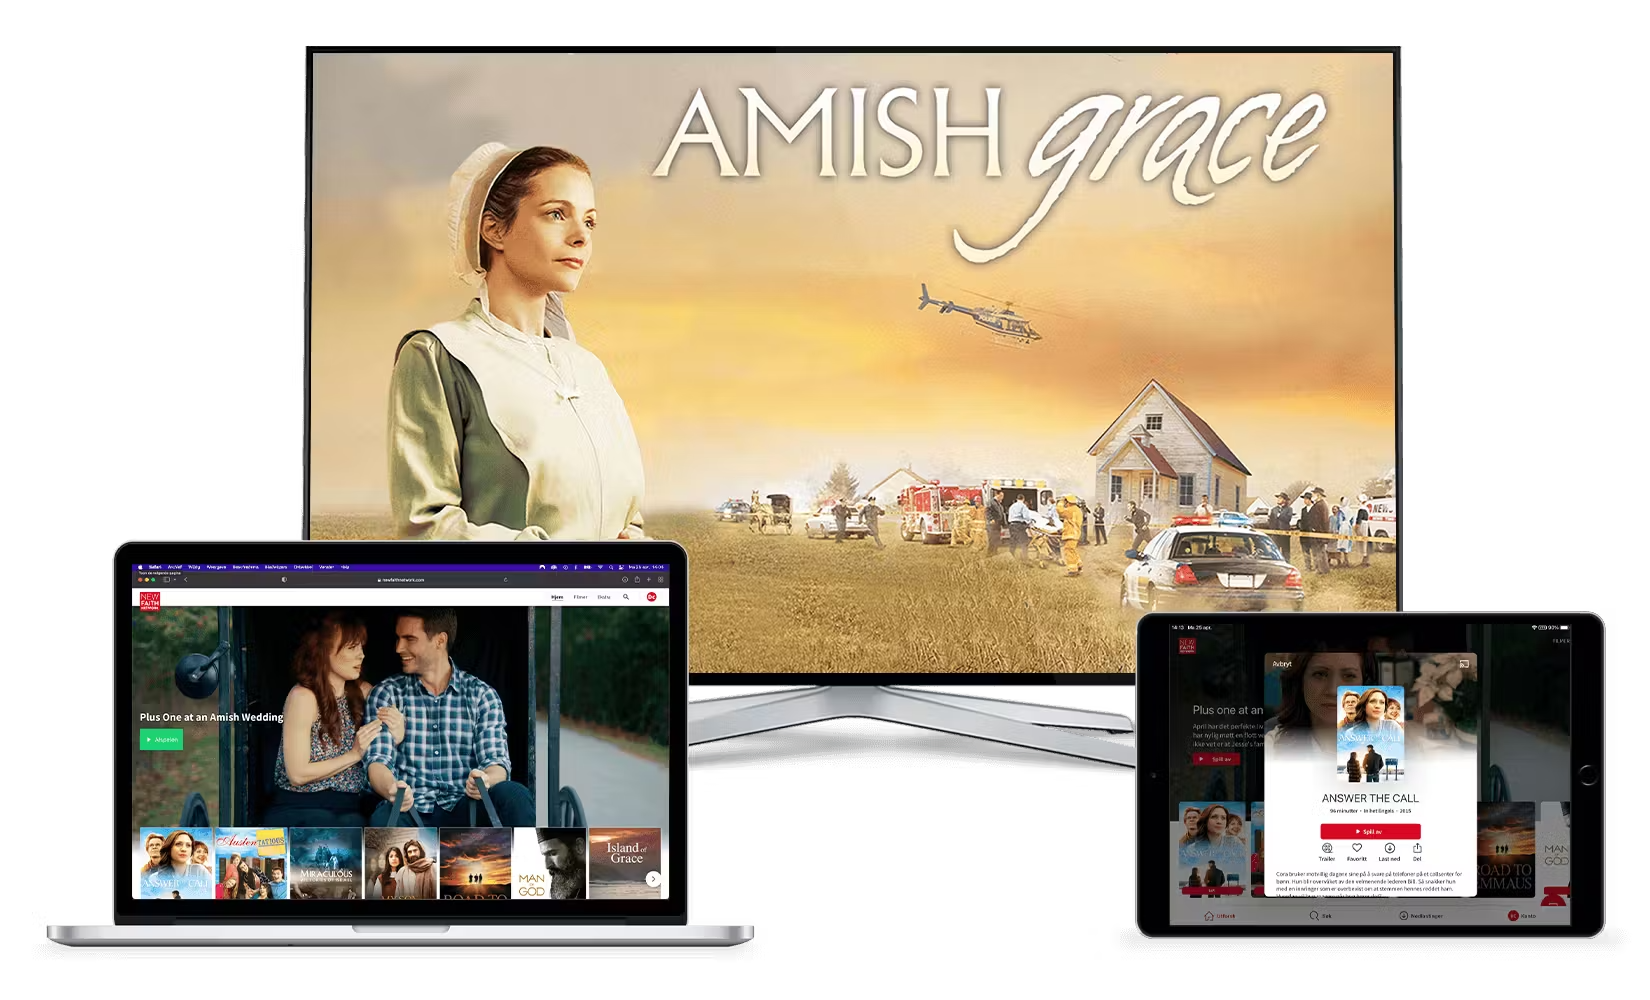 Amish filmer  poster image